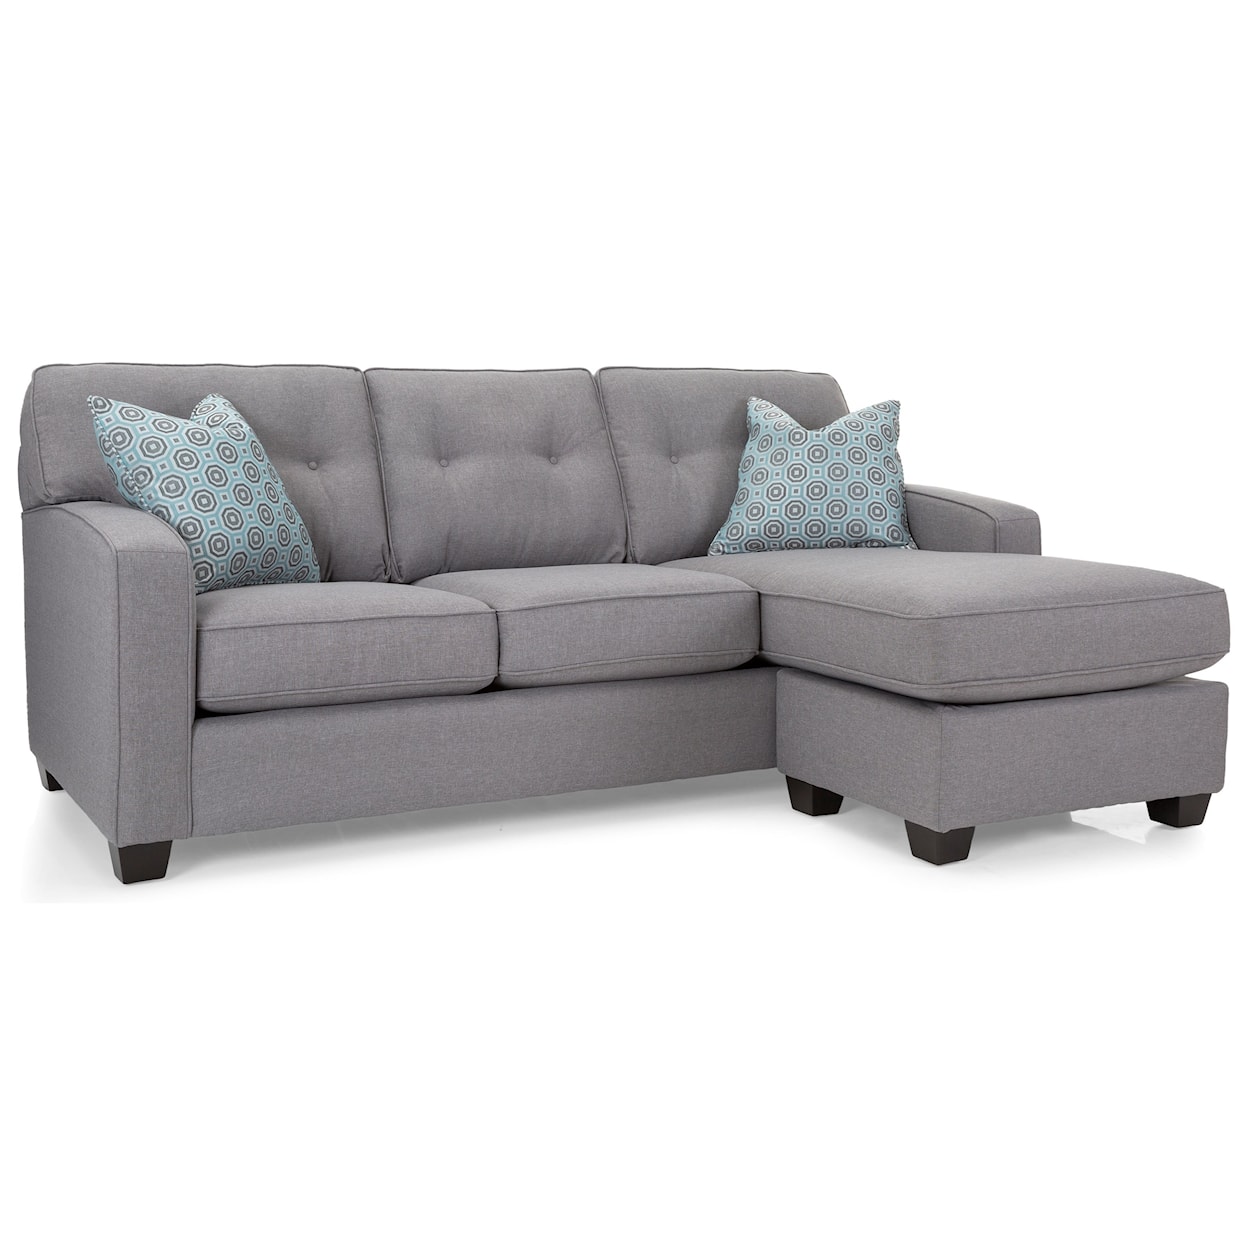 Decor-Rest 2298 Series Chaise Sofa